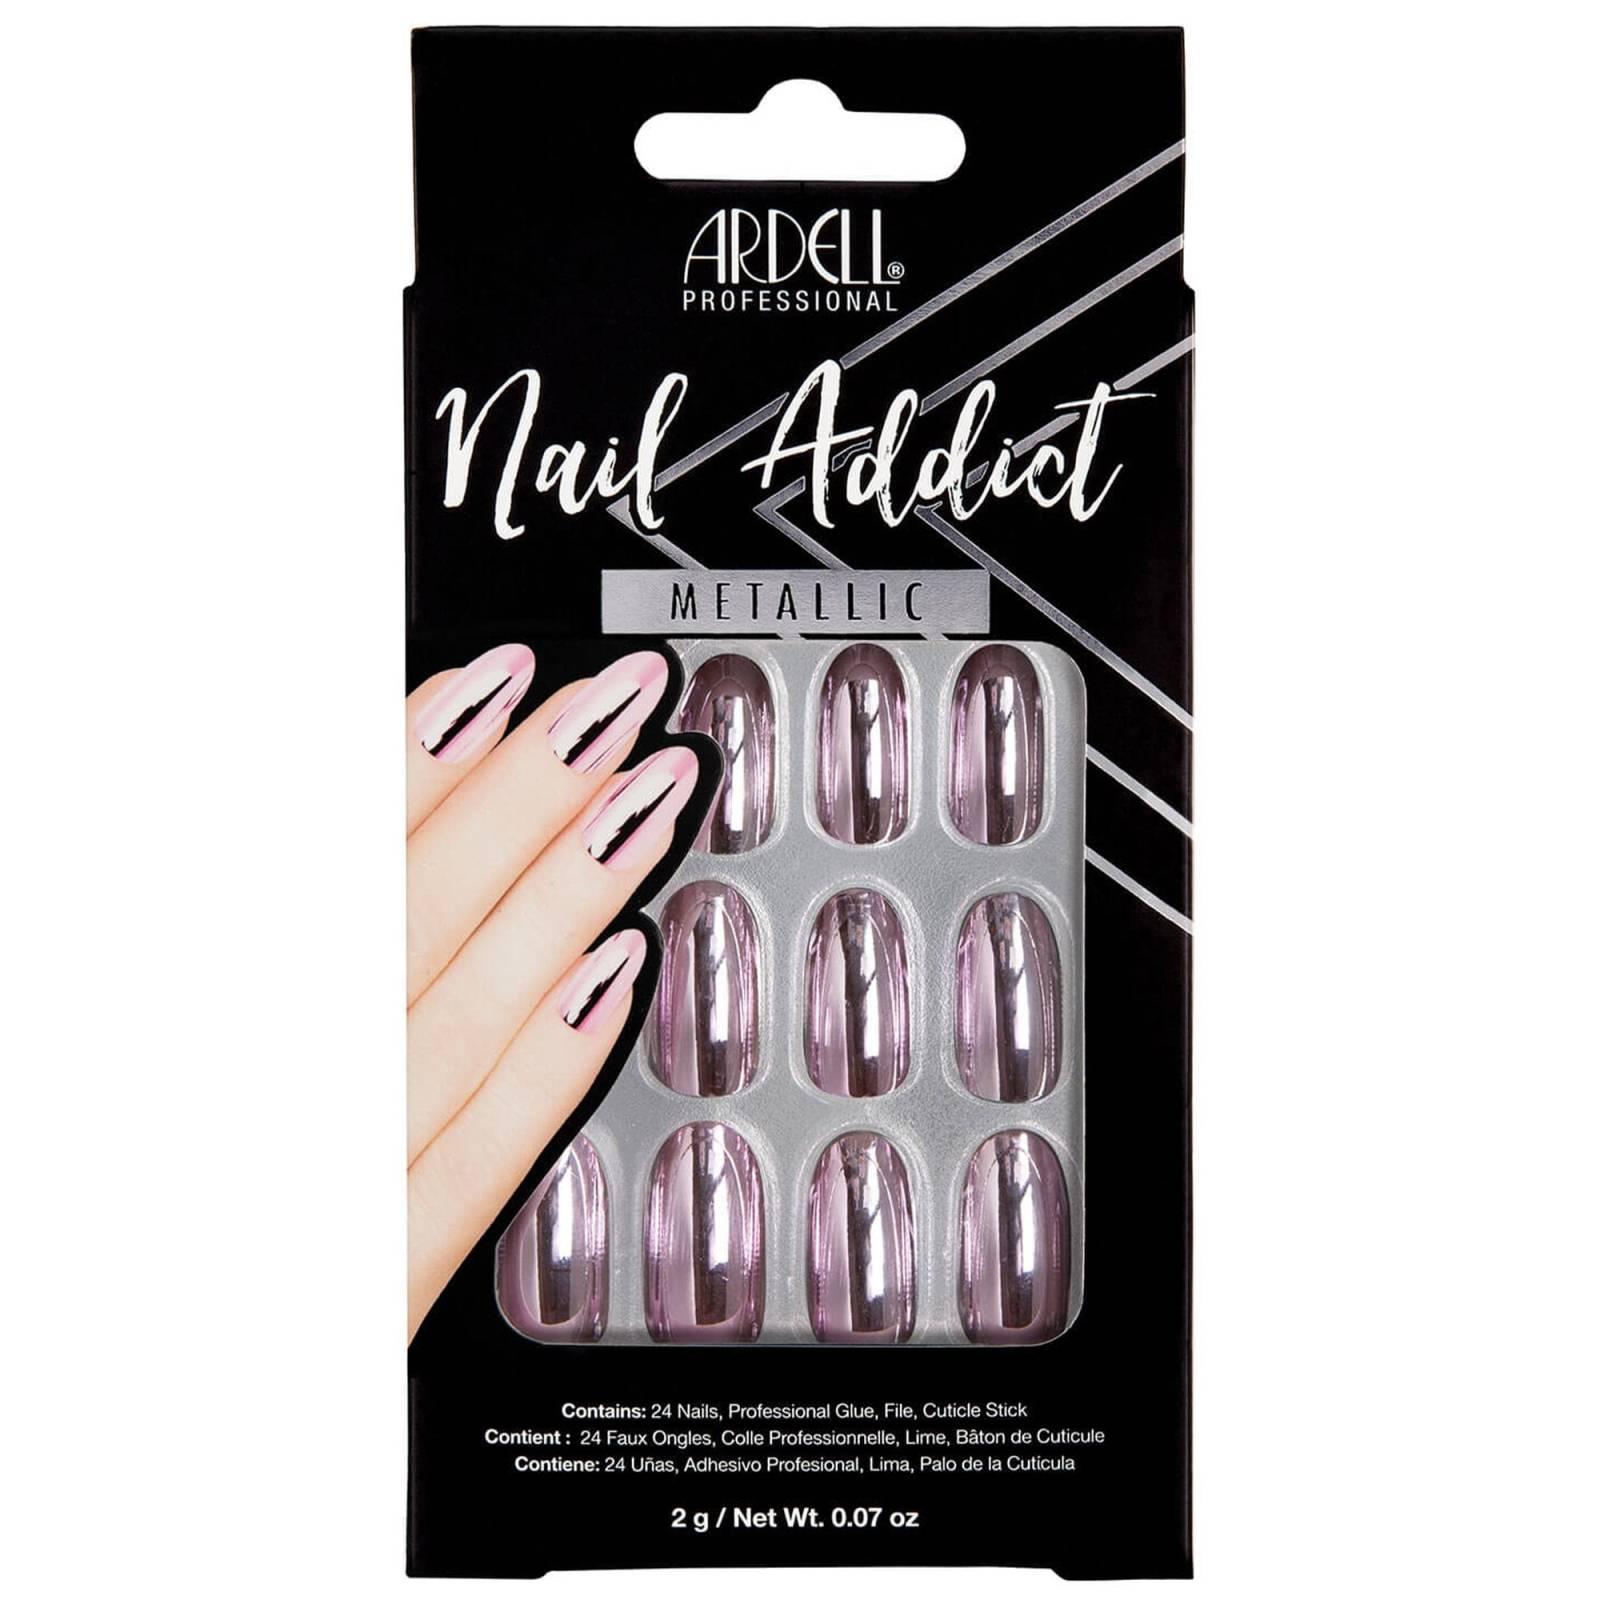 Ardell Nail Addict Metallic Press On Nails Metallic Pink 24 Pieces 